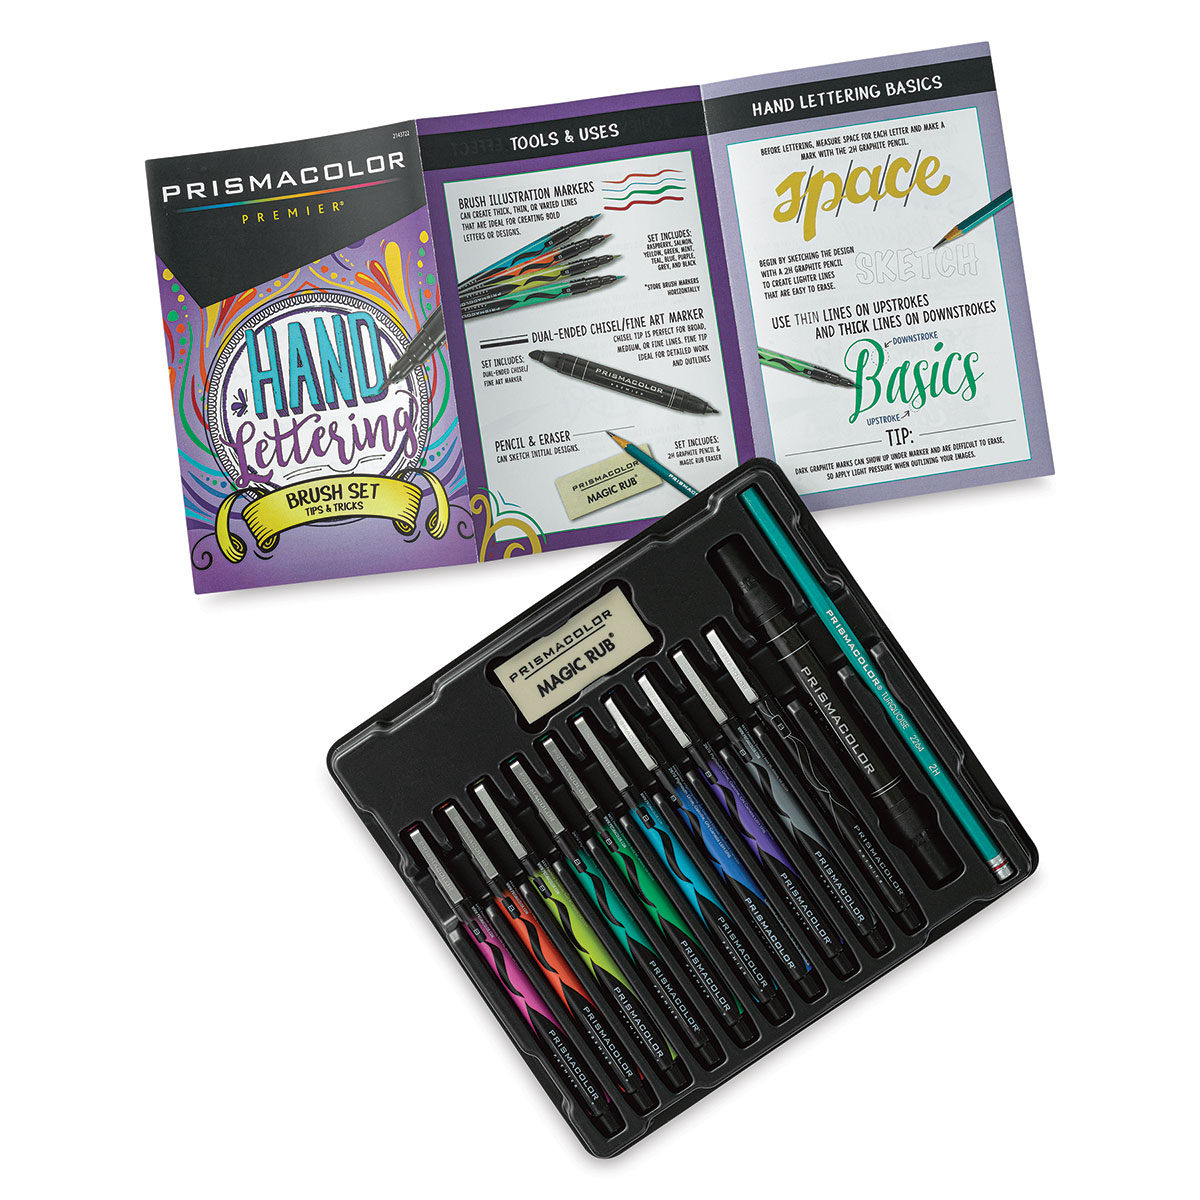 Prismacolor Handlettering Kit Review 